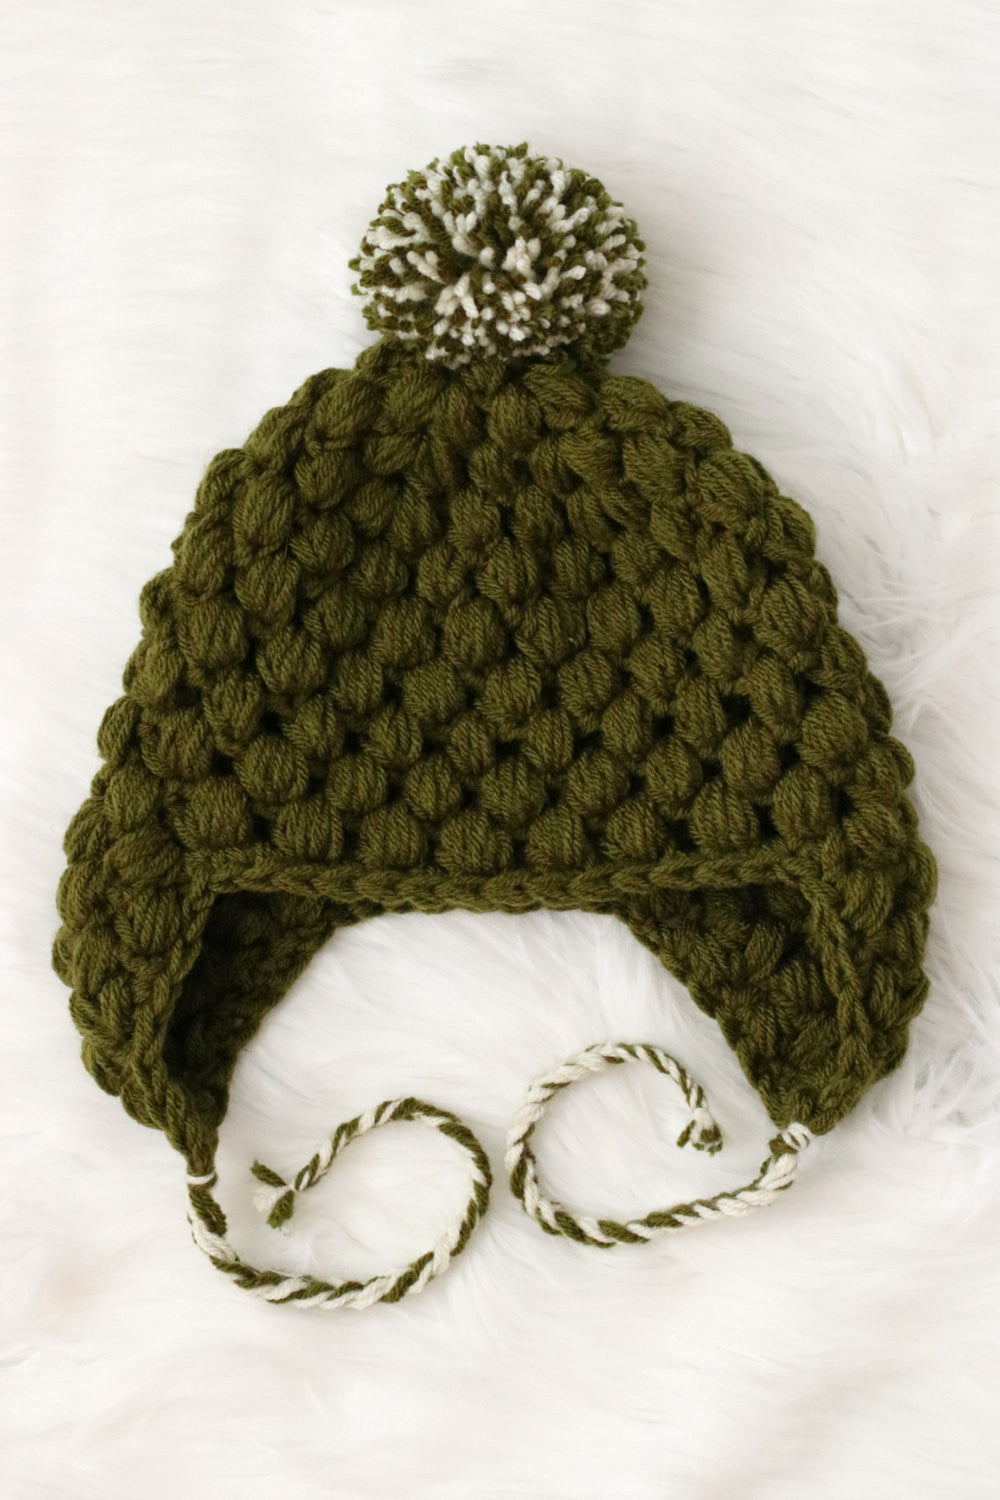 Cypress Beanie // Crochet PDF Pattern